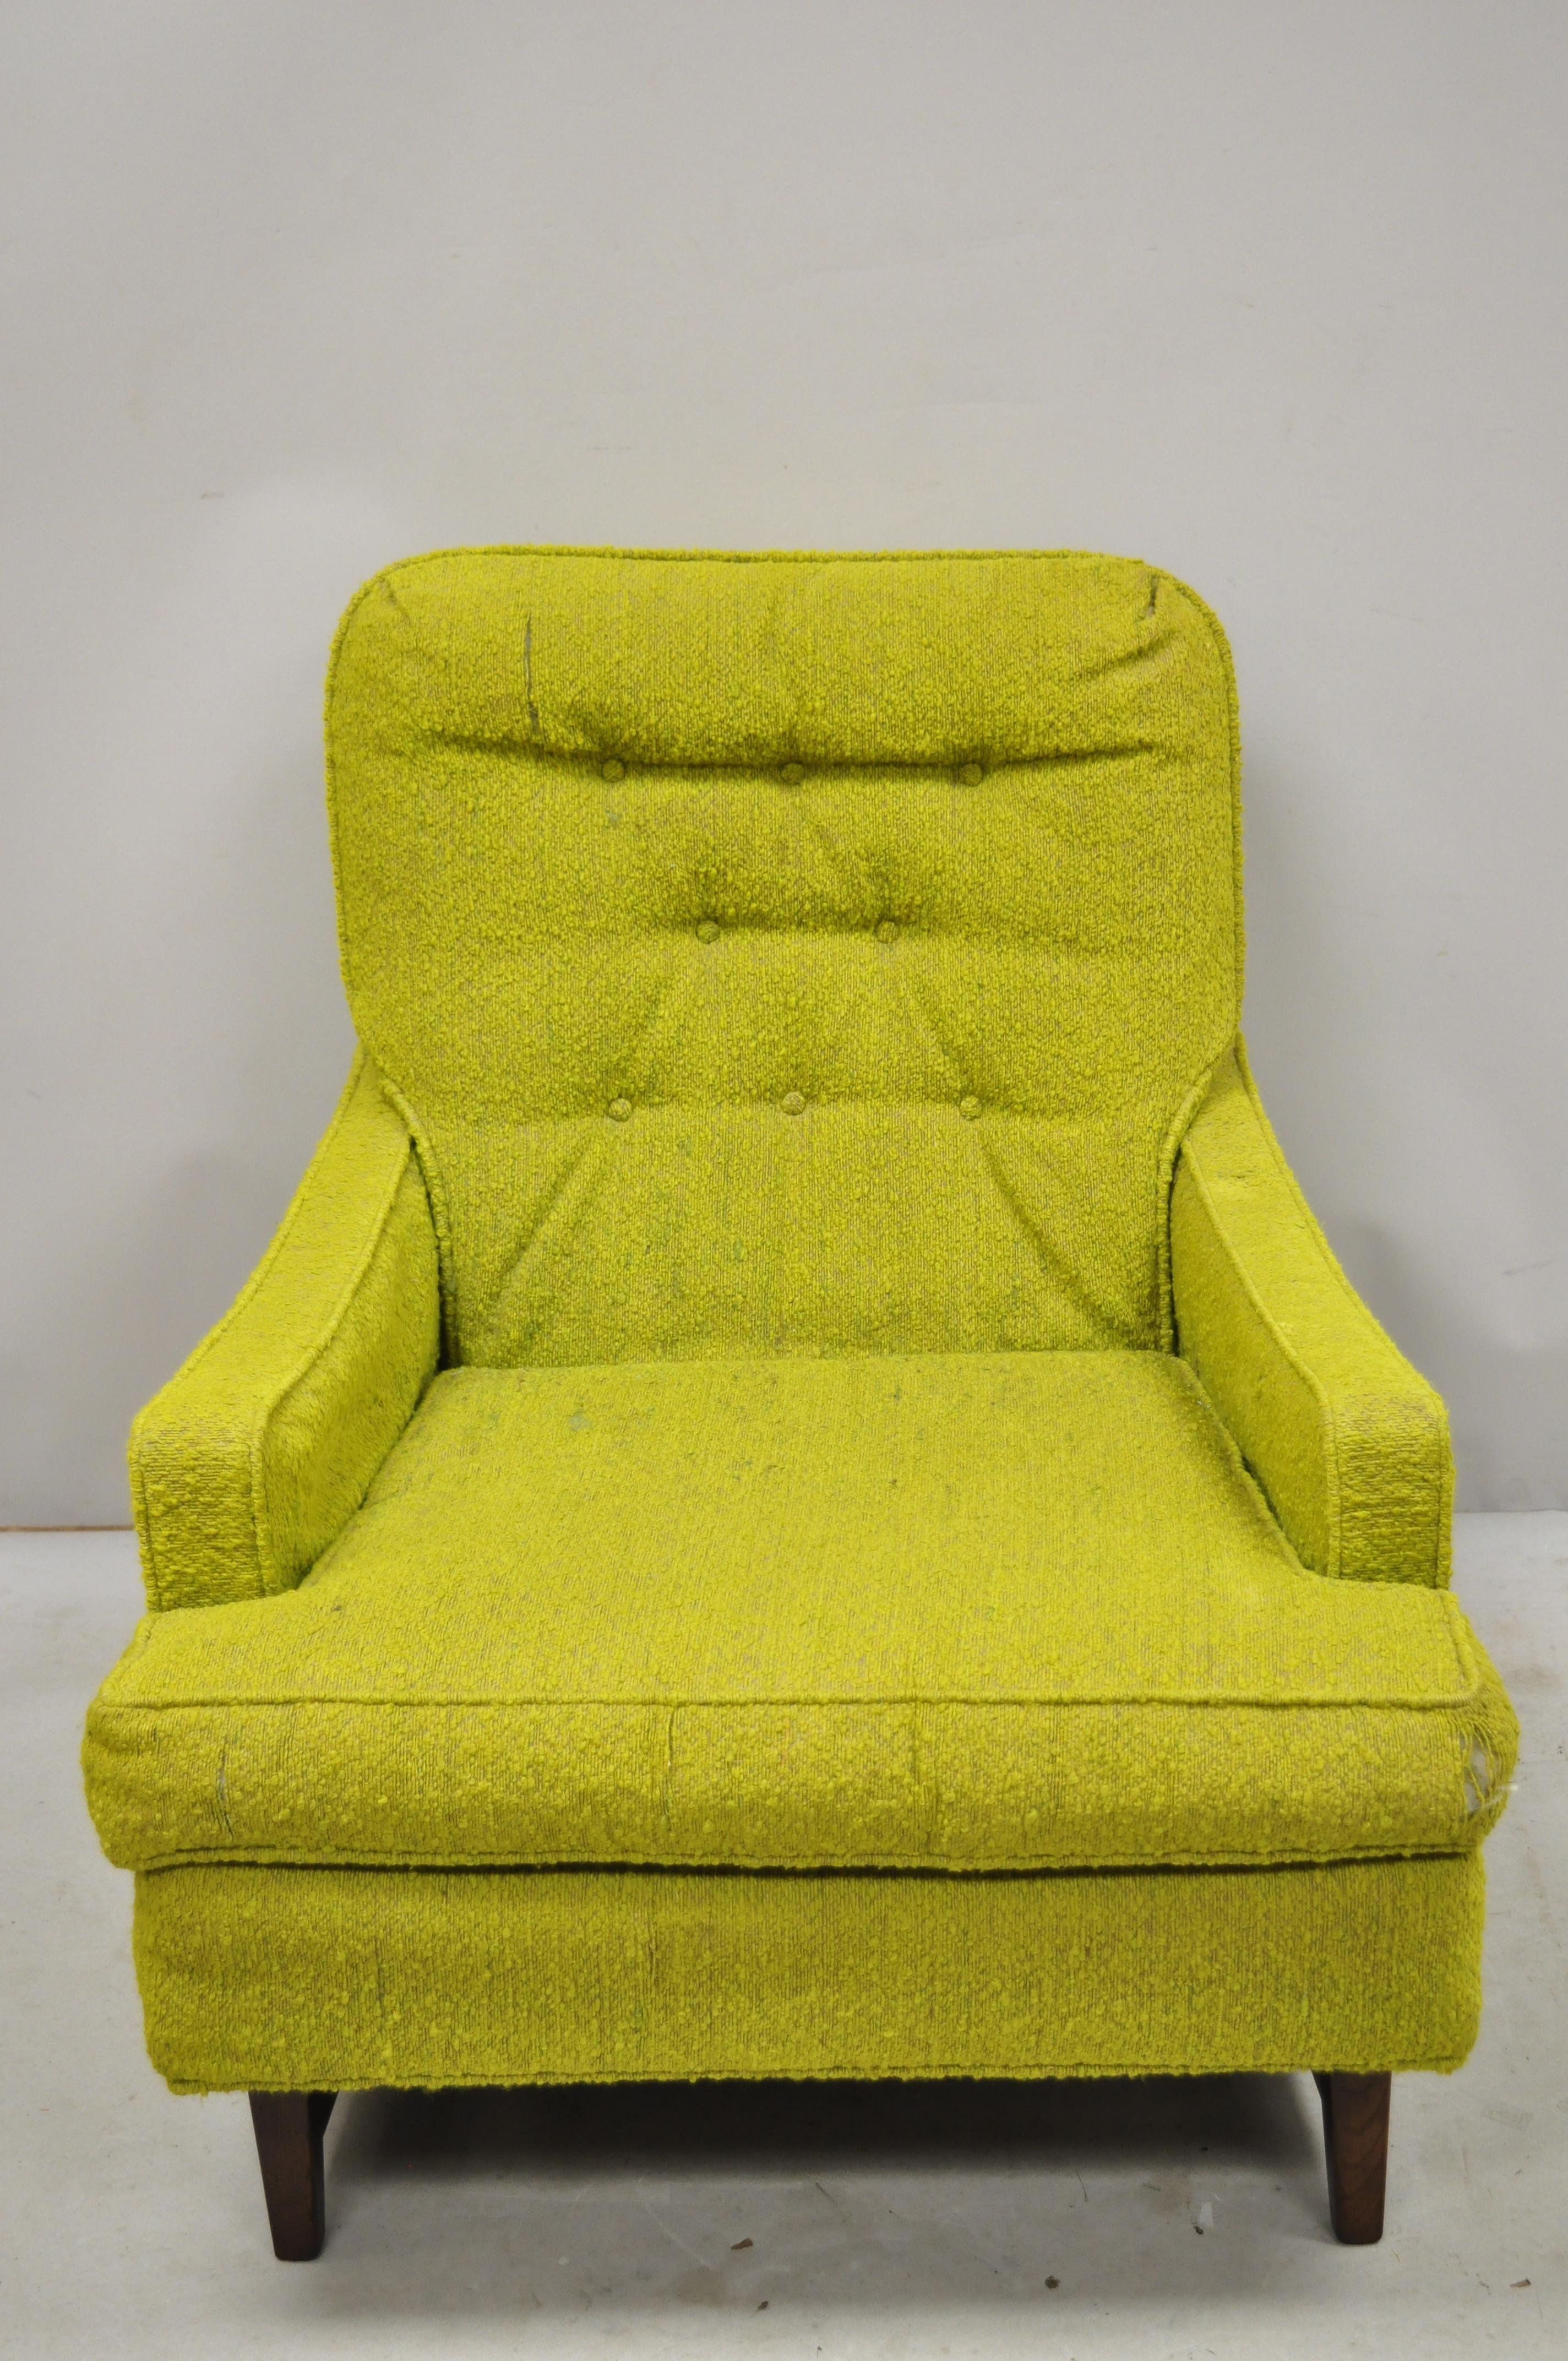 Vintage Mid-Century Modern Selig Monroe upholstered club lounge chair. Item features solid wood frame, original label, clean modernist lines, sleek sculptural form, circa mid-20th century. Measurements: 34